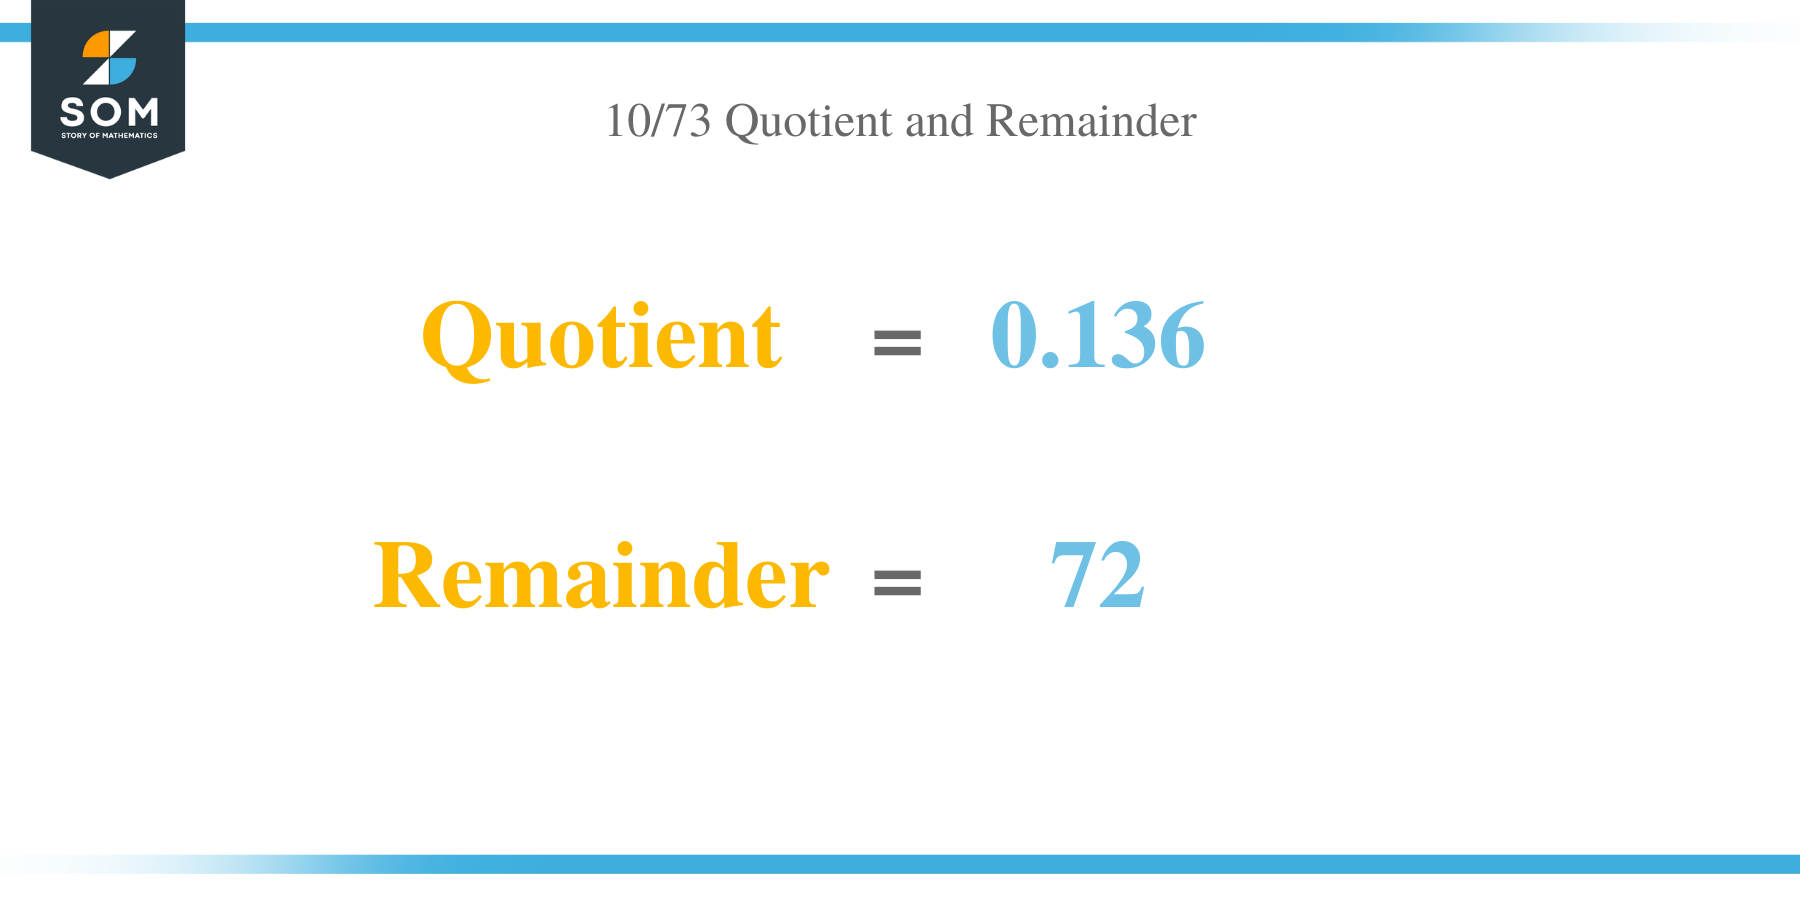 Quotient and Remainder of 10 per 73